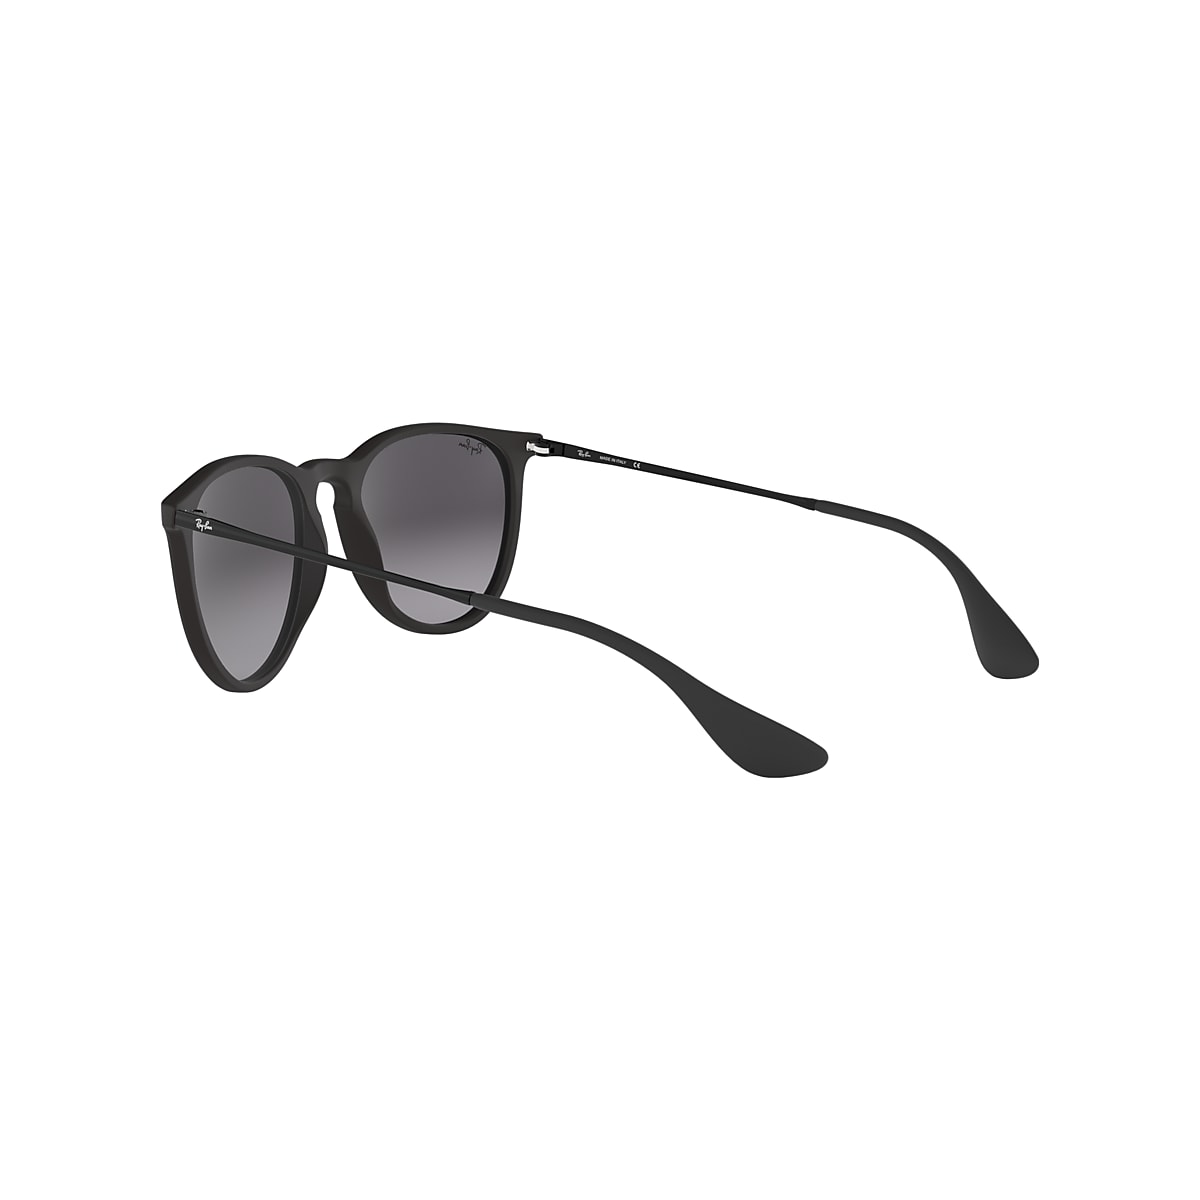 ERIKA CLASSIC Sunglasses Black and Grey - | Ray-Ban®